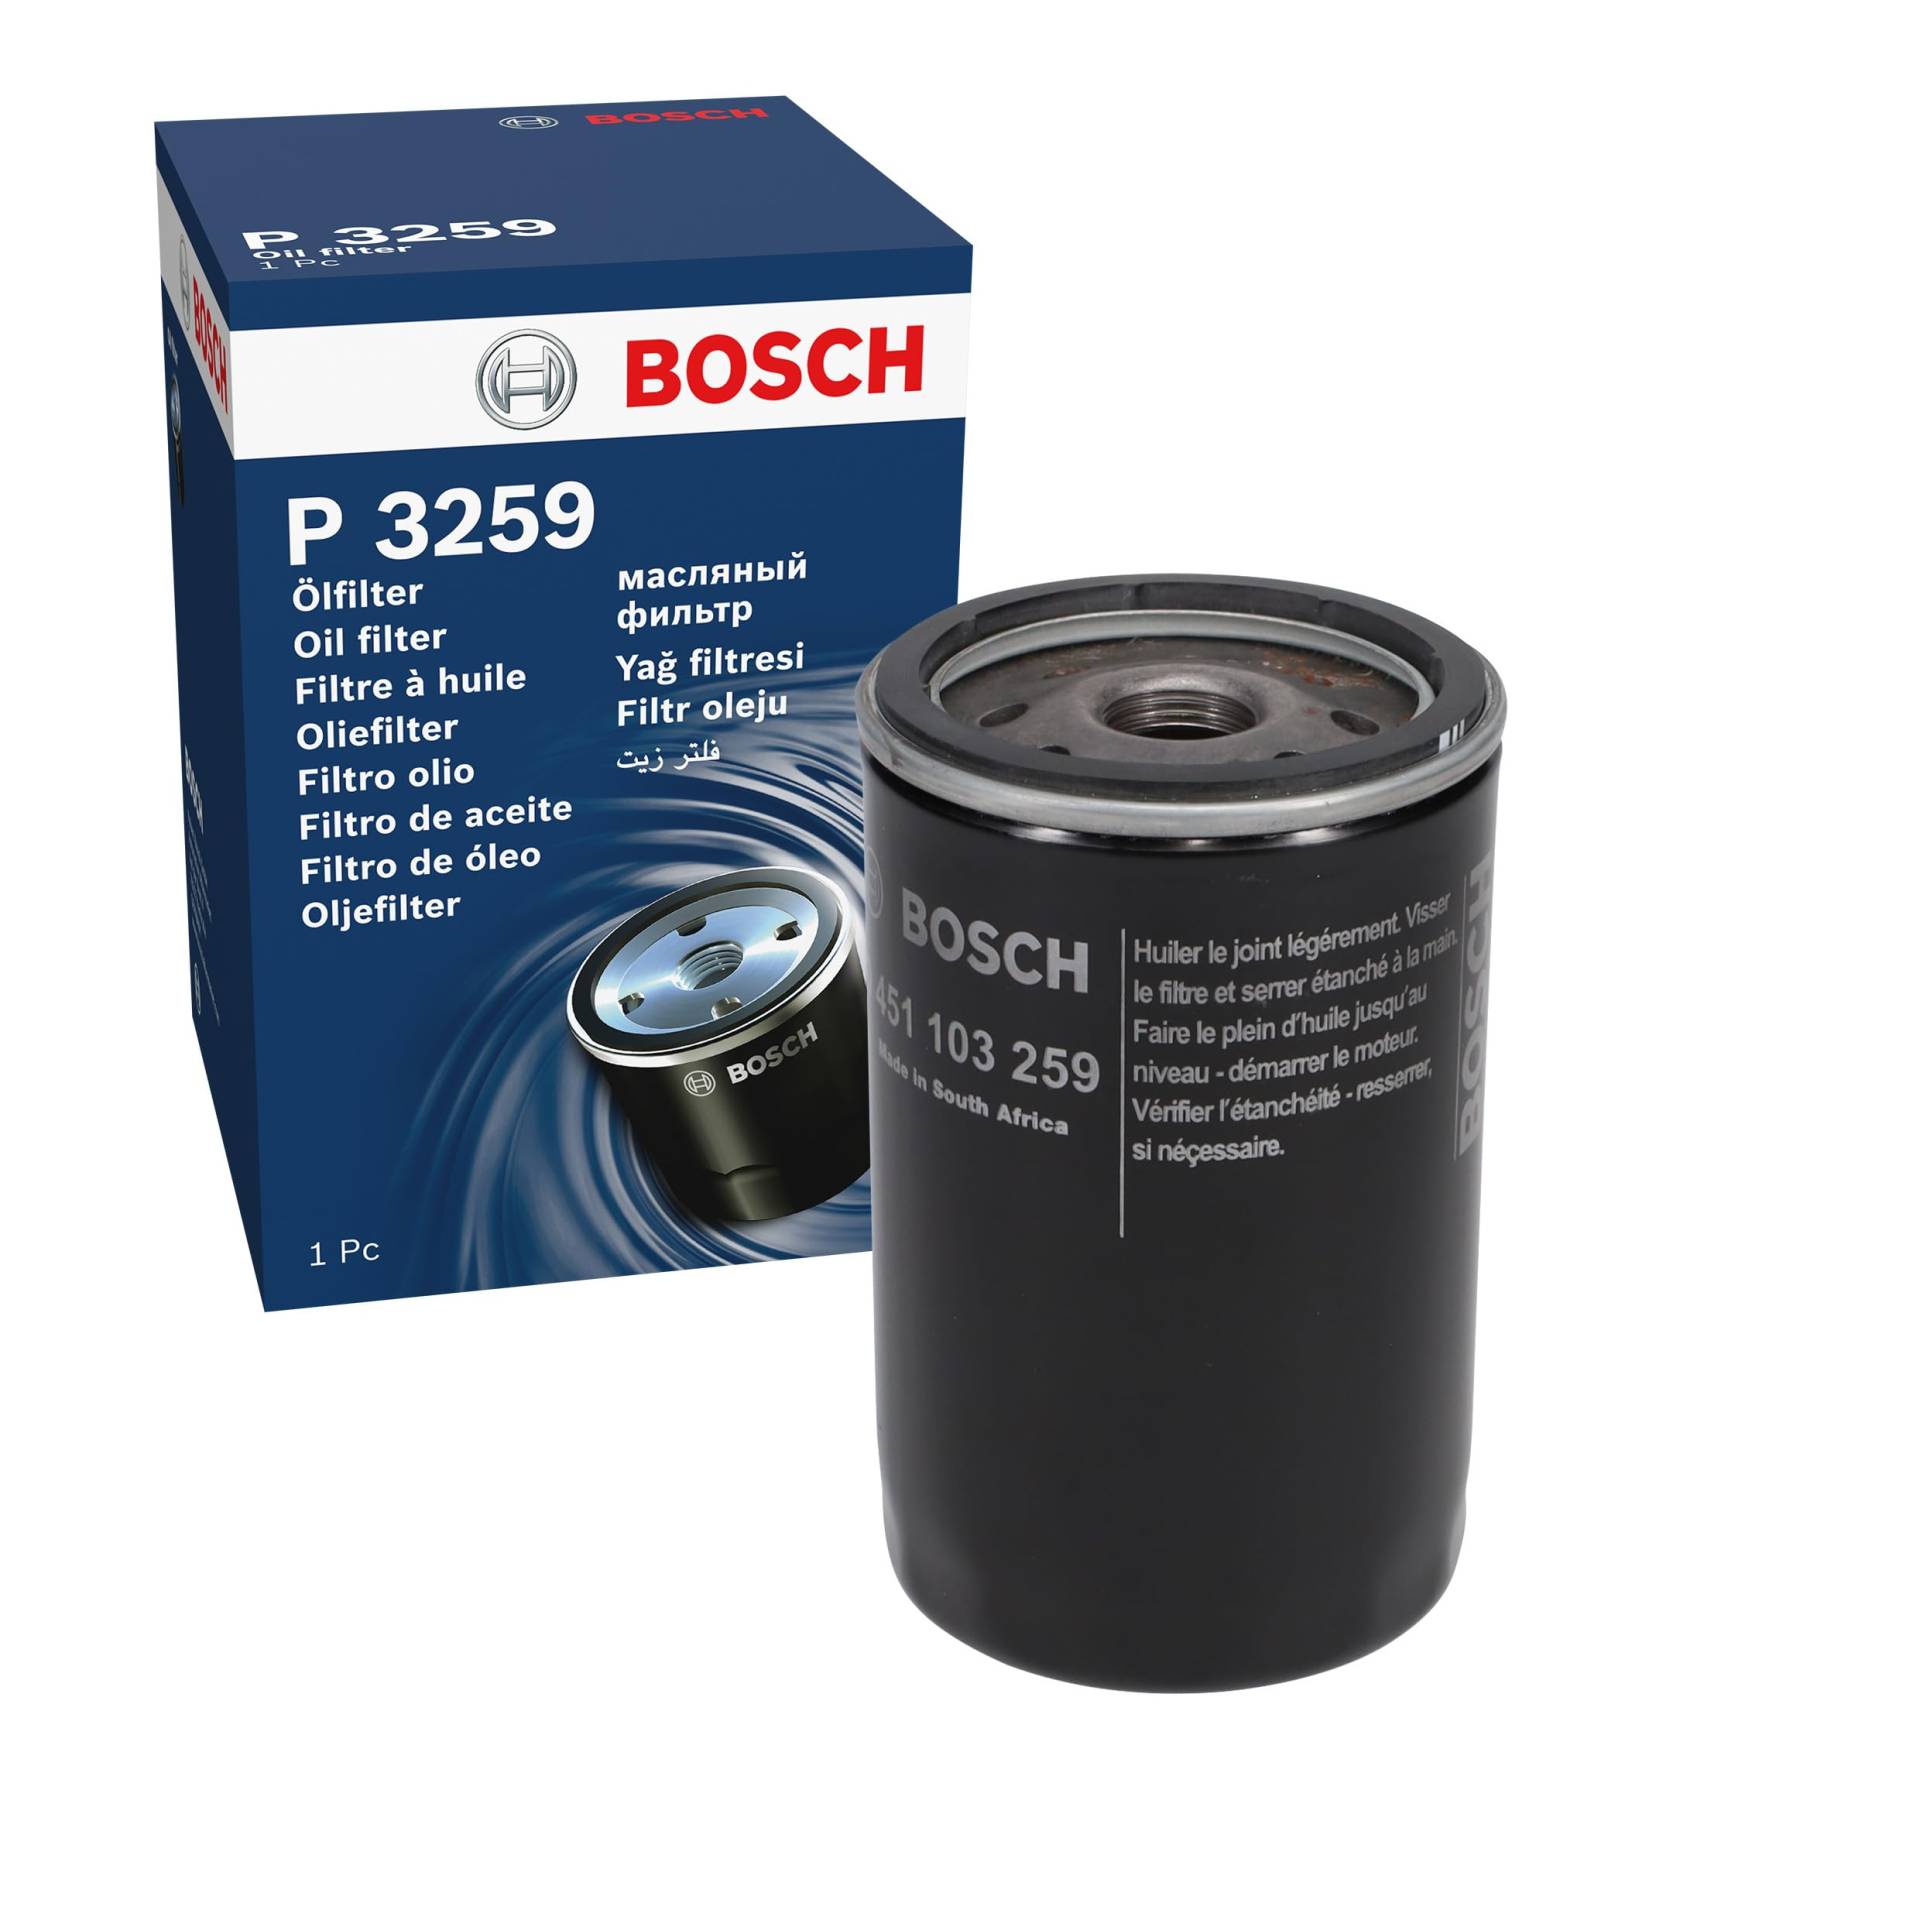 Bosch P3259 - Ölfilter Auto von LIQUI MOLY